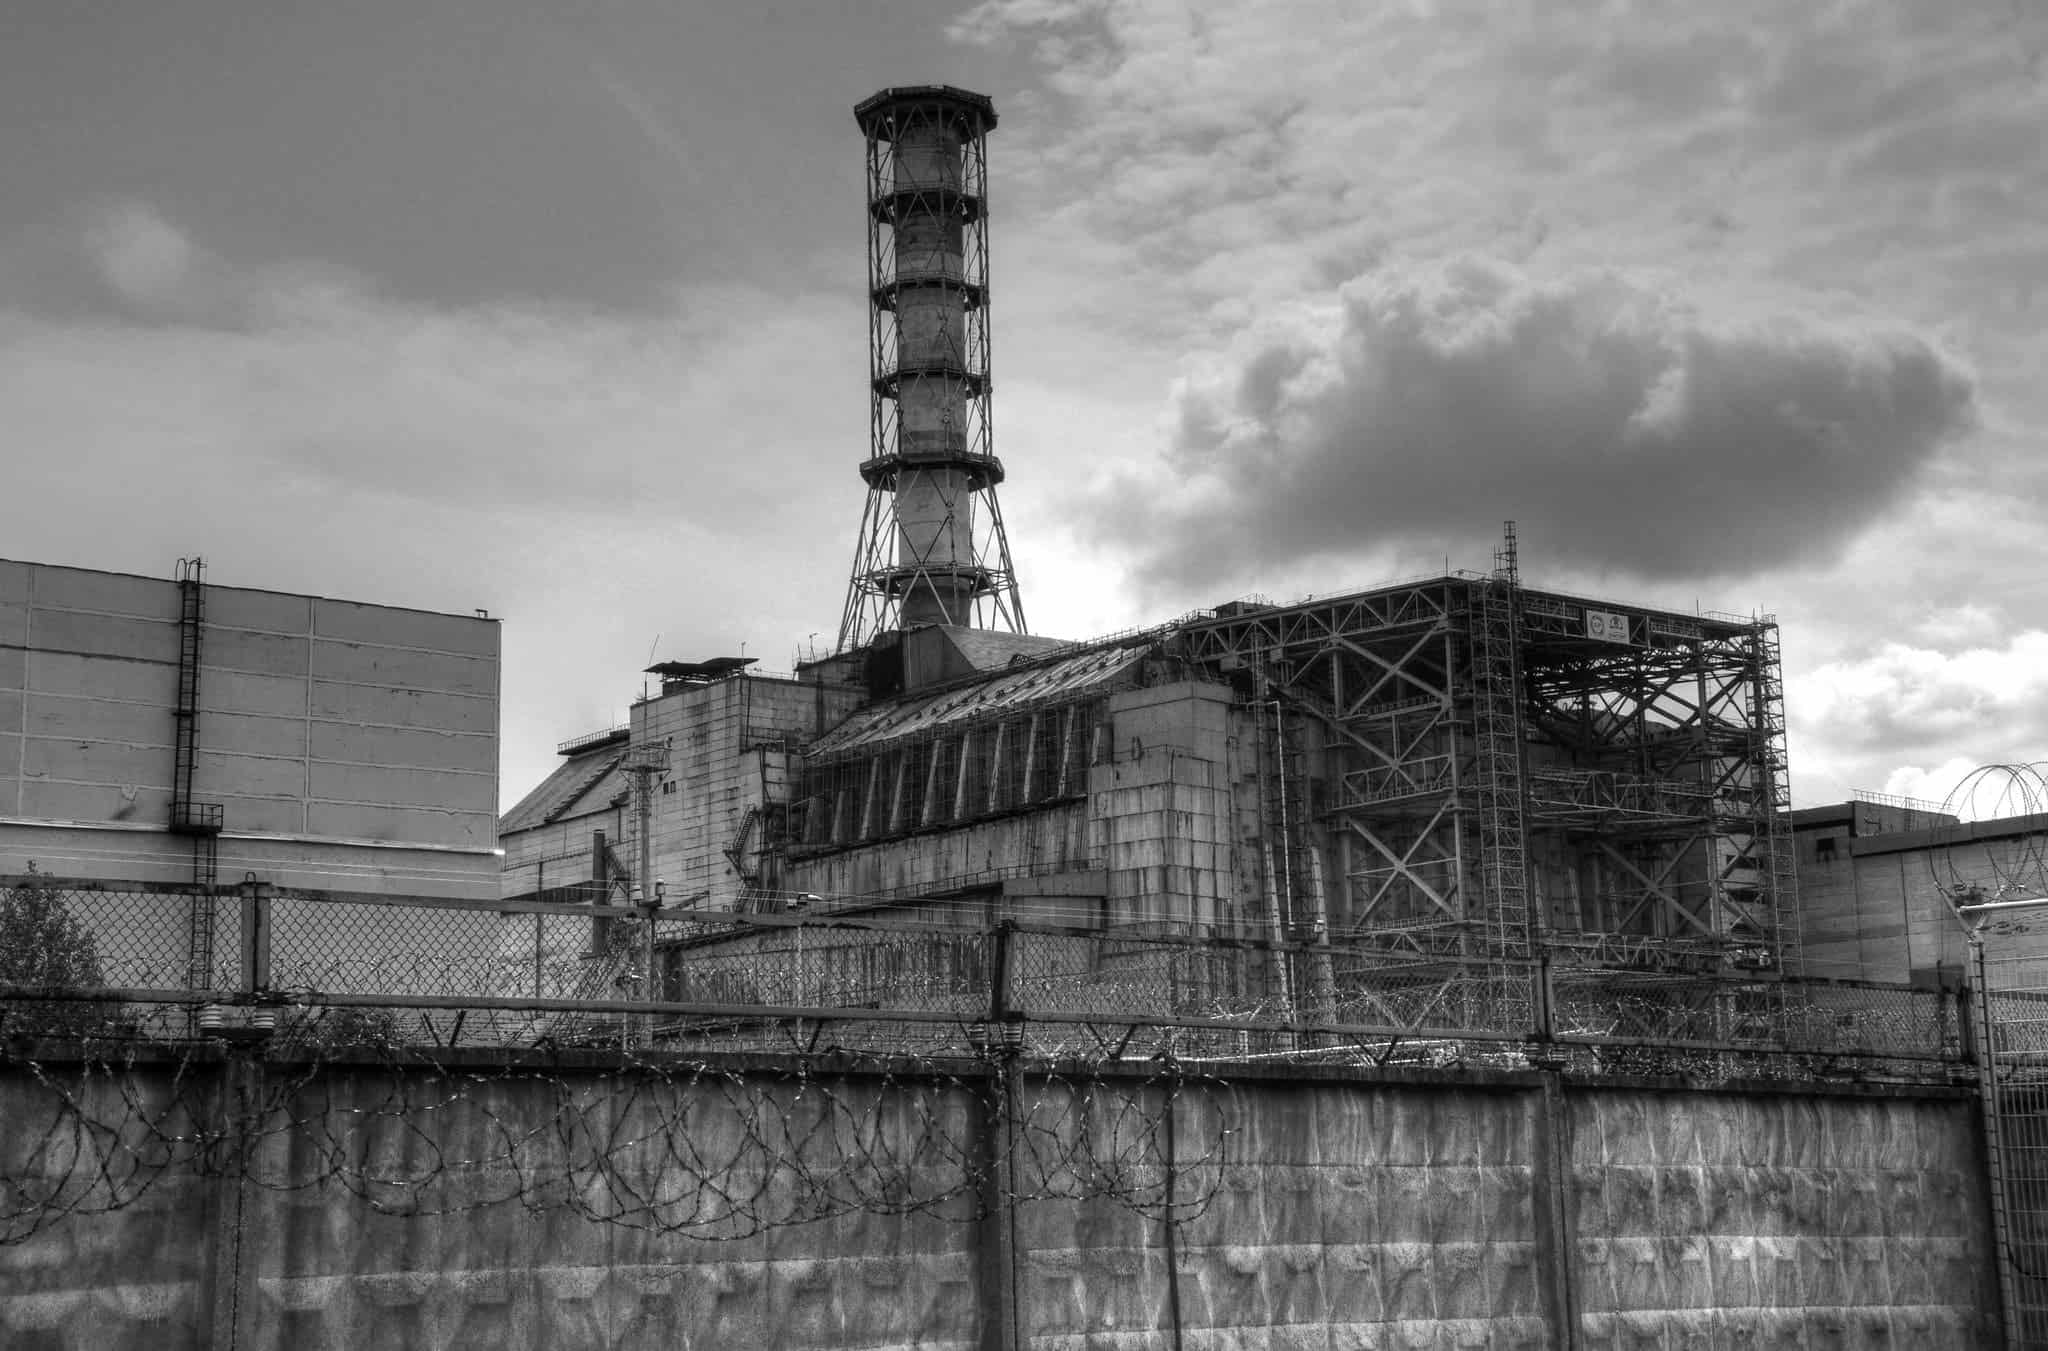 chernobyl disaster case study